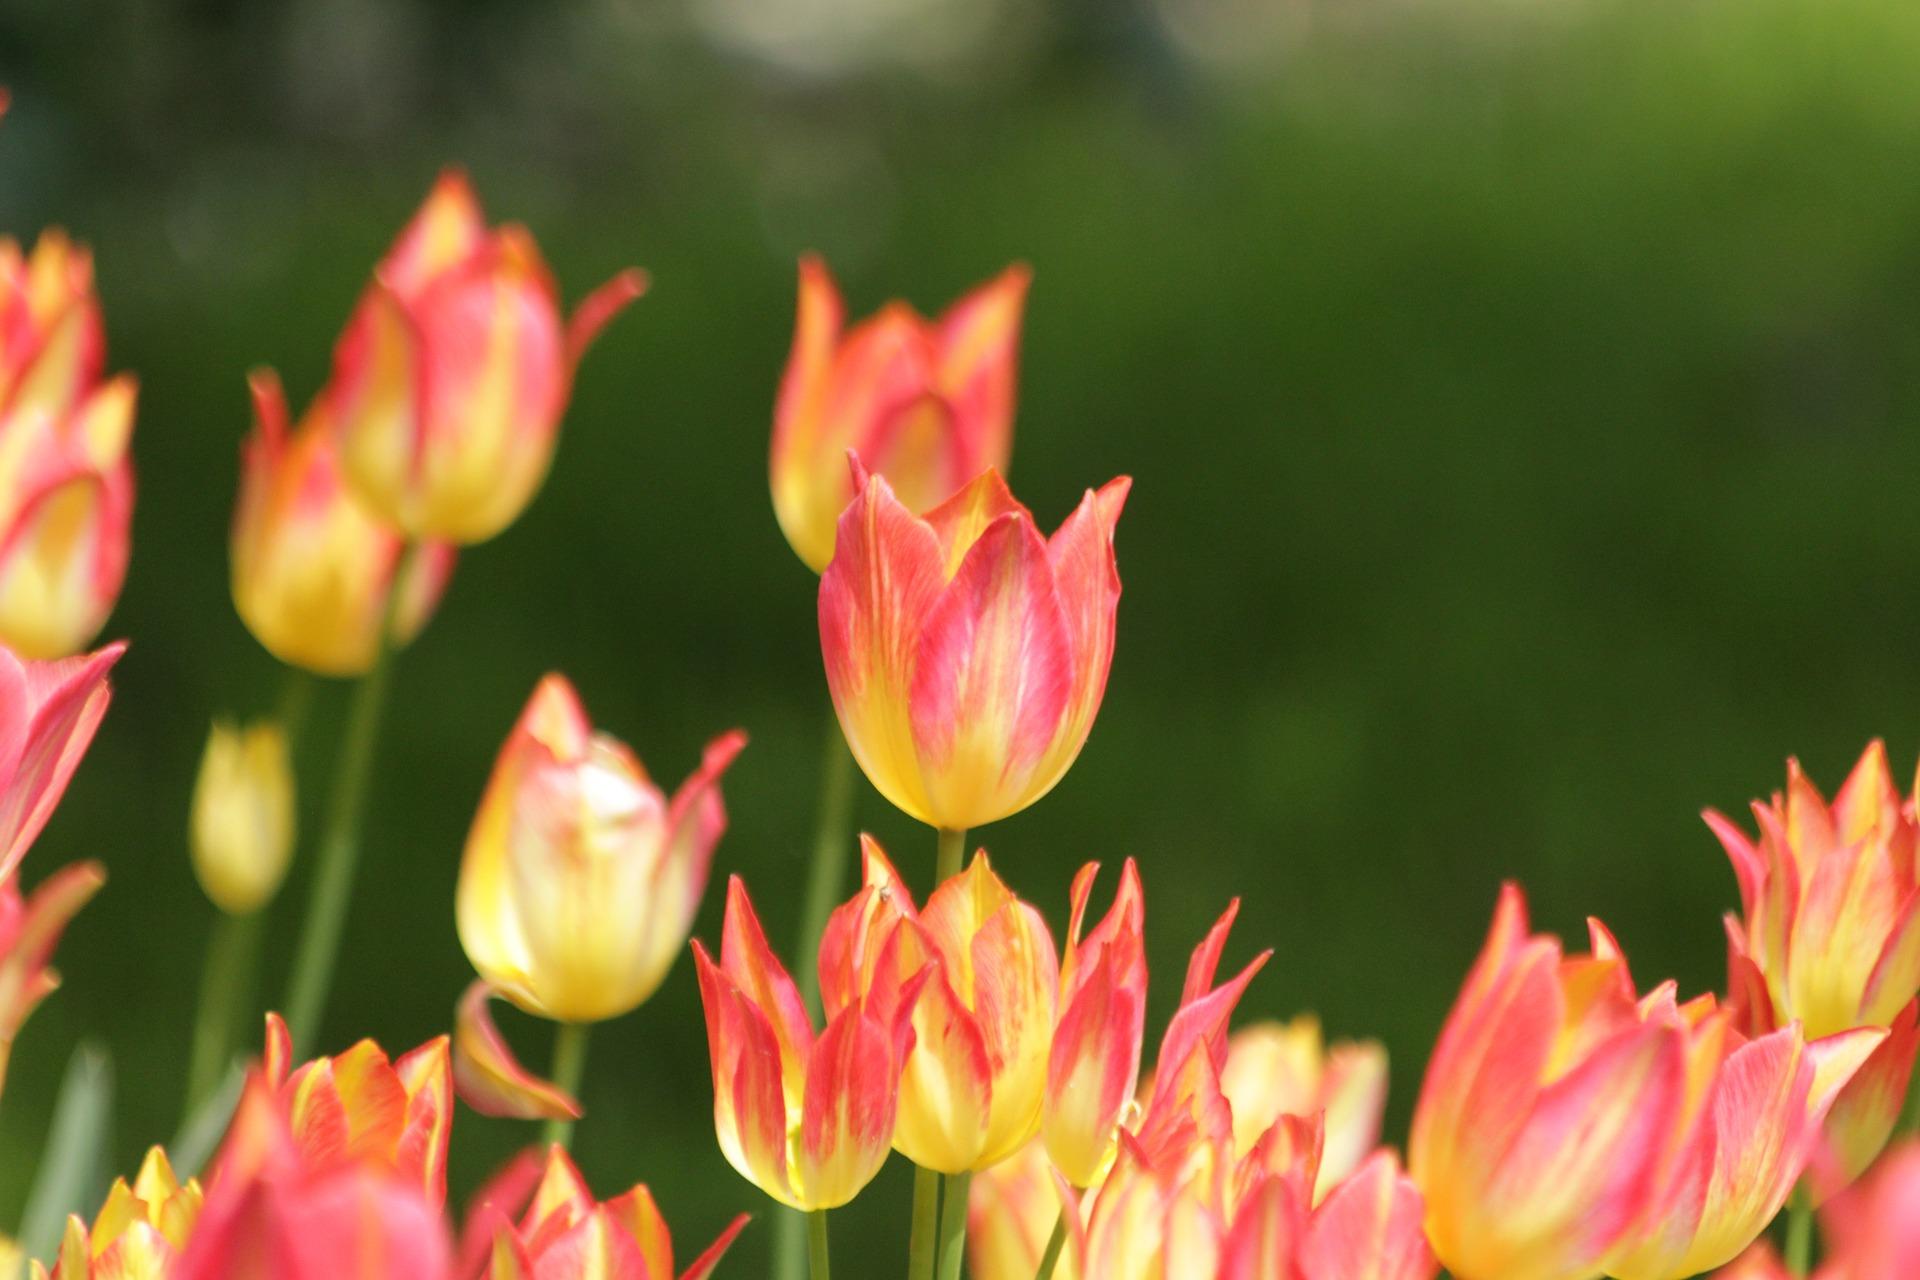 Tulip Bunchflowering 'Antoinette' - Tulip from Leo Berbee Bulb Company